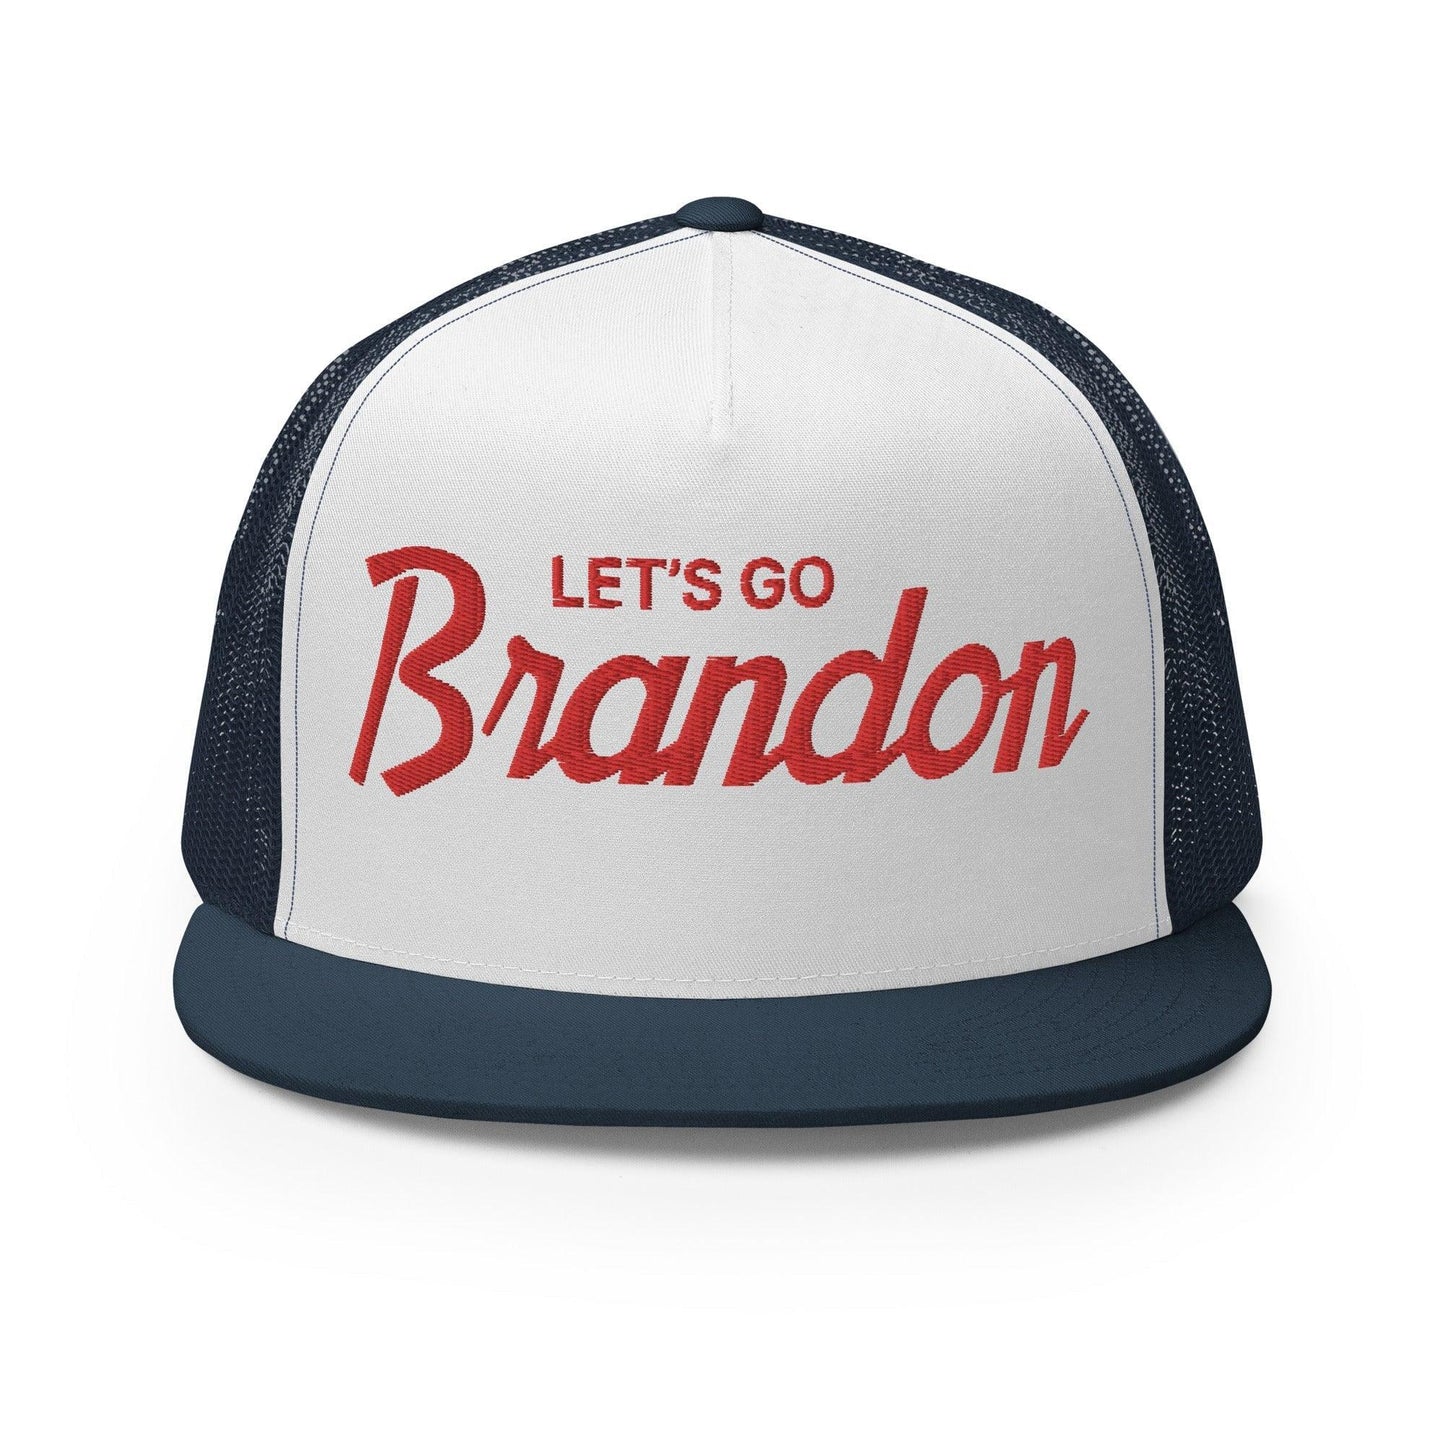 Let's Go Brandon Script Flat Bill Brim Snapback Trucker Hat Navy/ White/ Navy